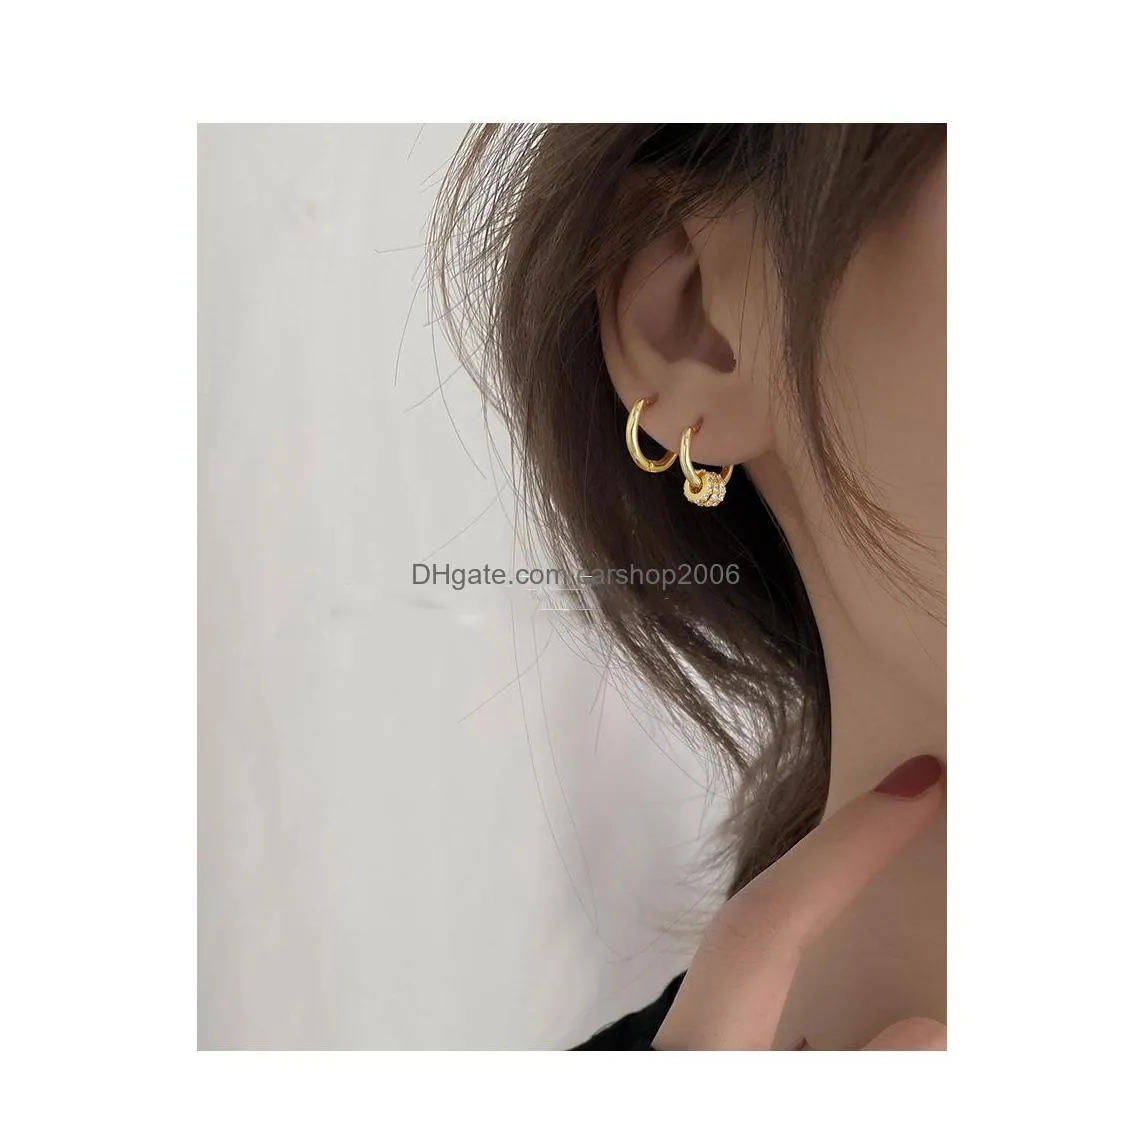 silver two wear methods small circle rhinestone stud earrings women unique design fashion light luxury jewelry